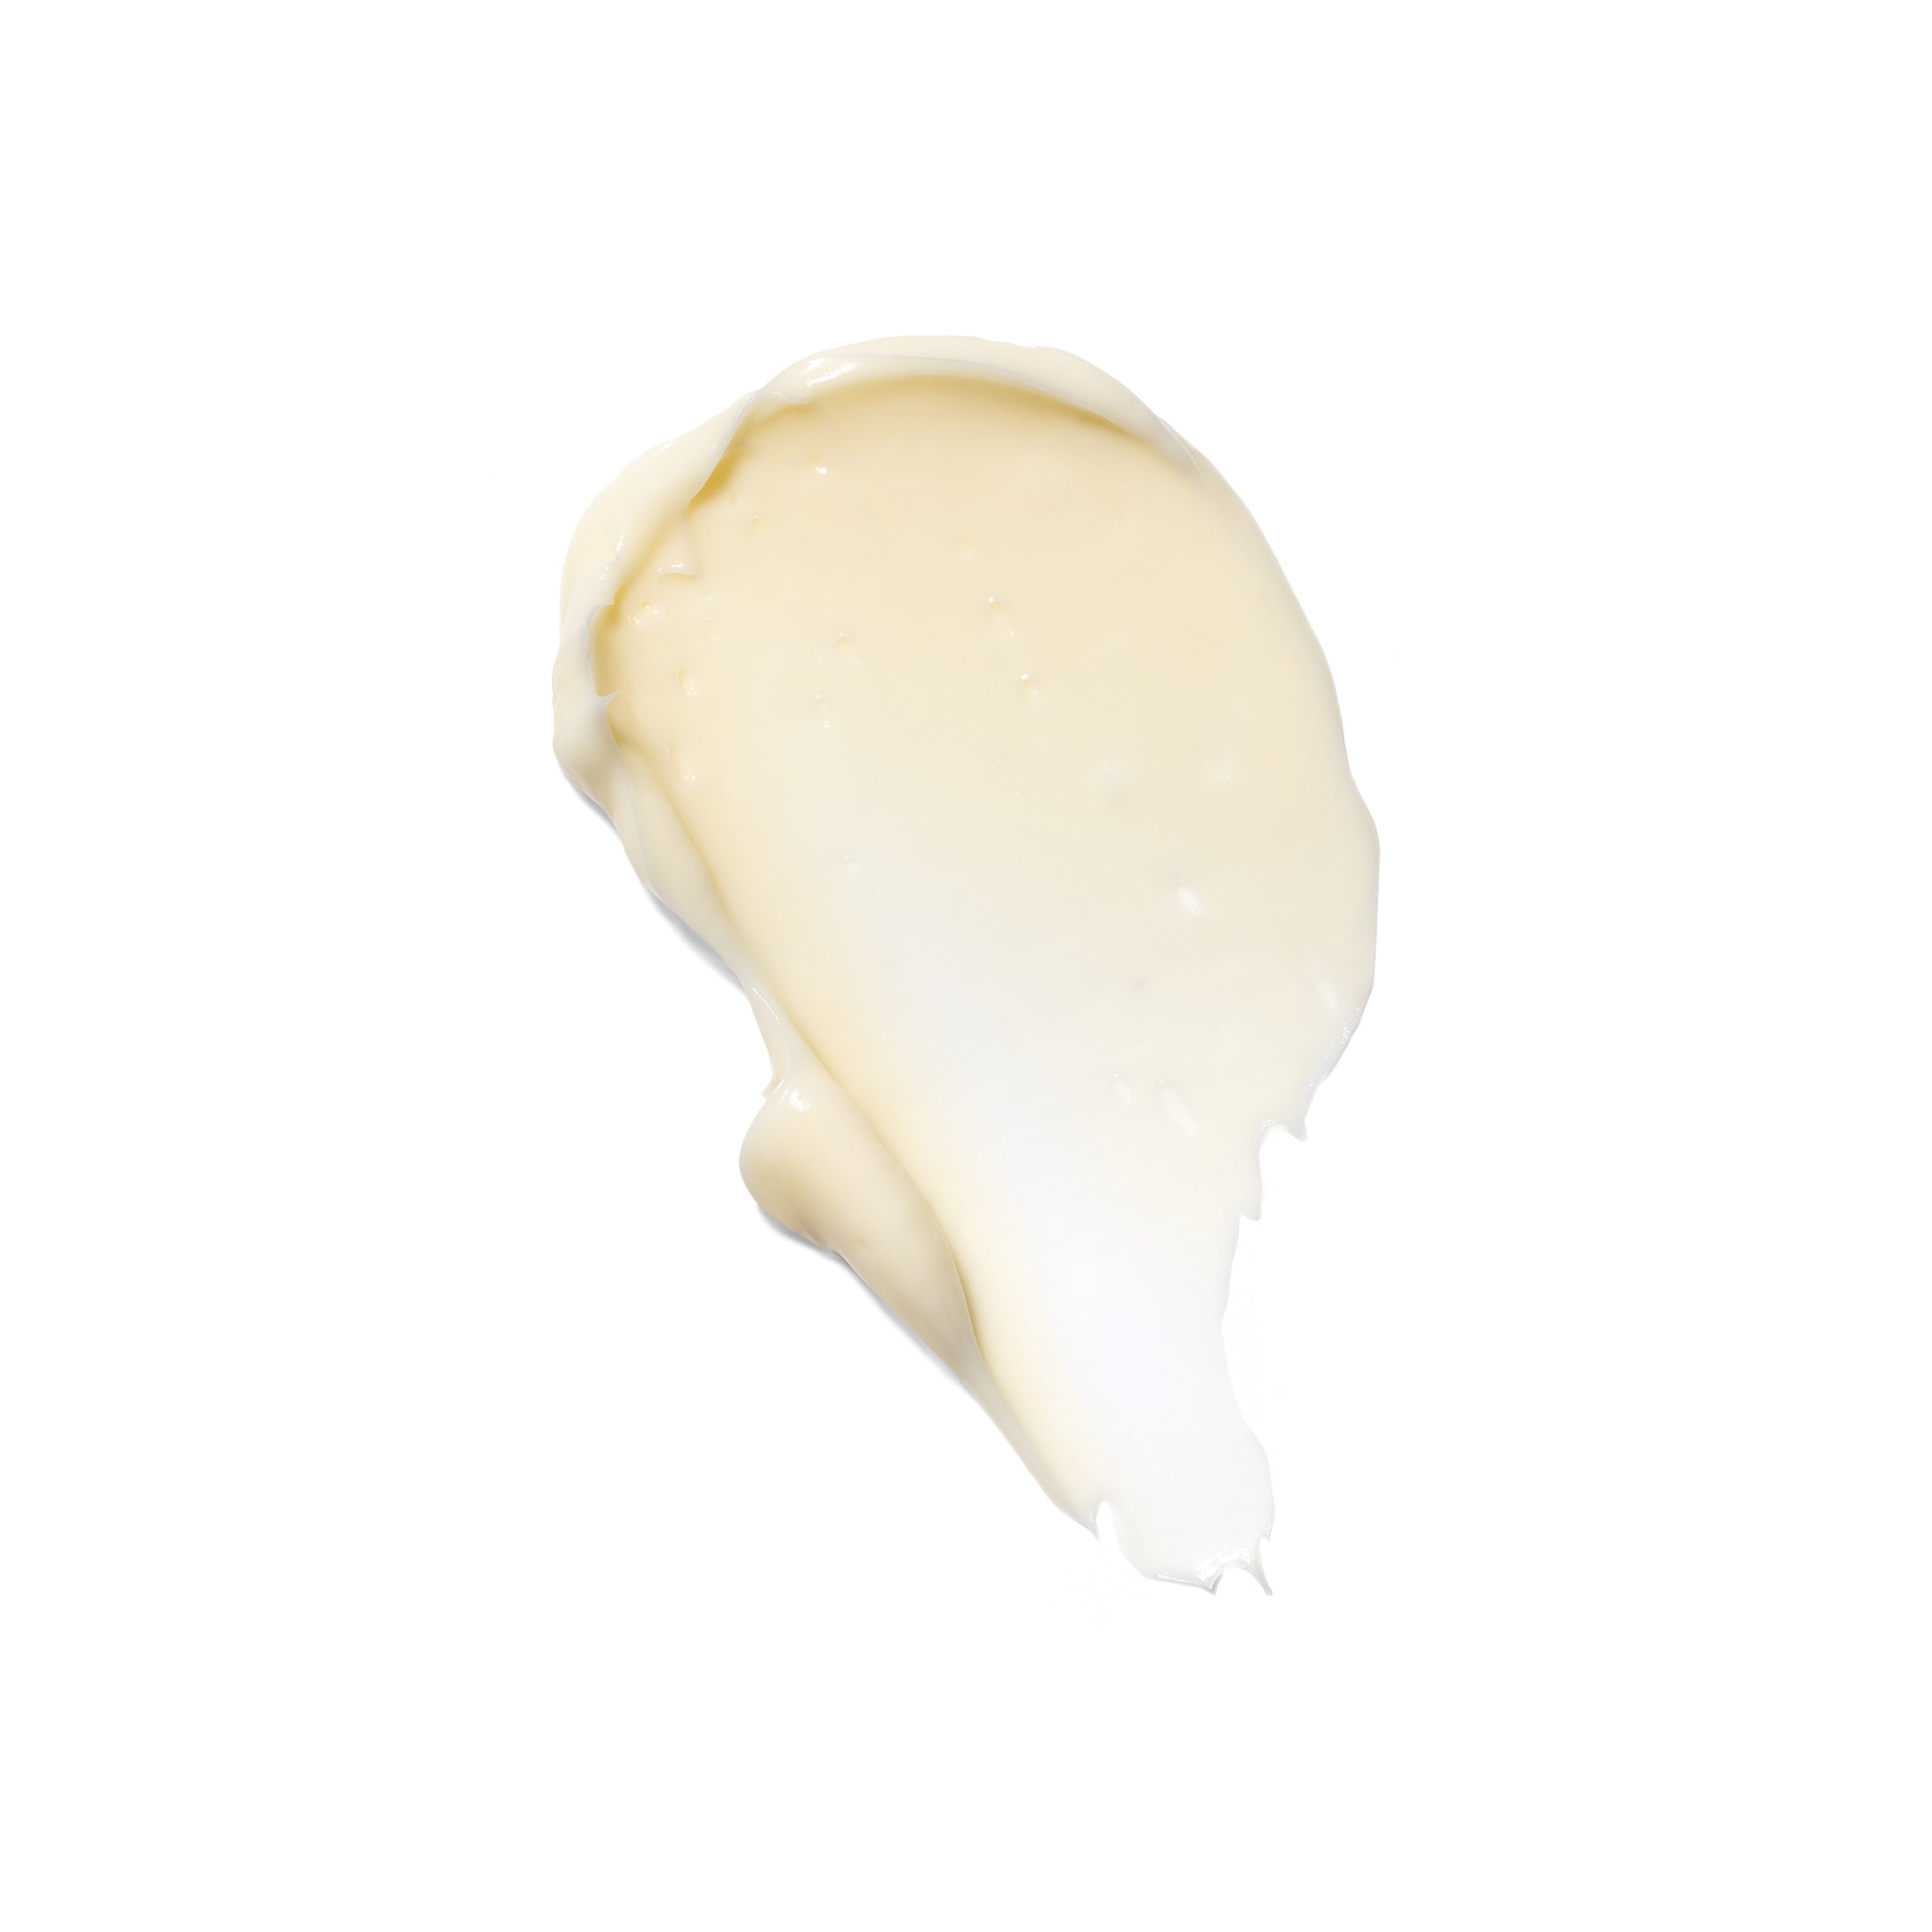 A smear of Farmacy's Honey Halo ceramide face moisturizer